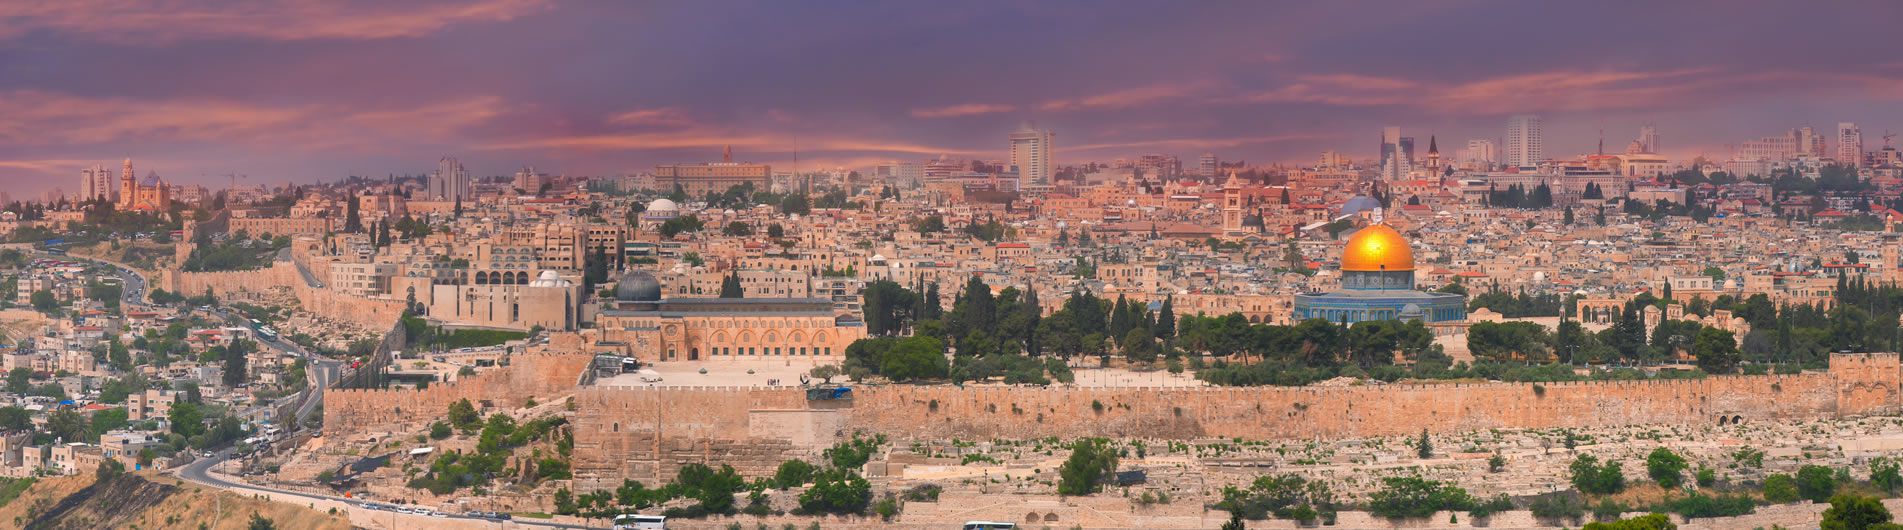 Overview of Jerusalem